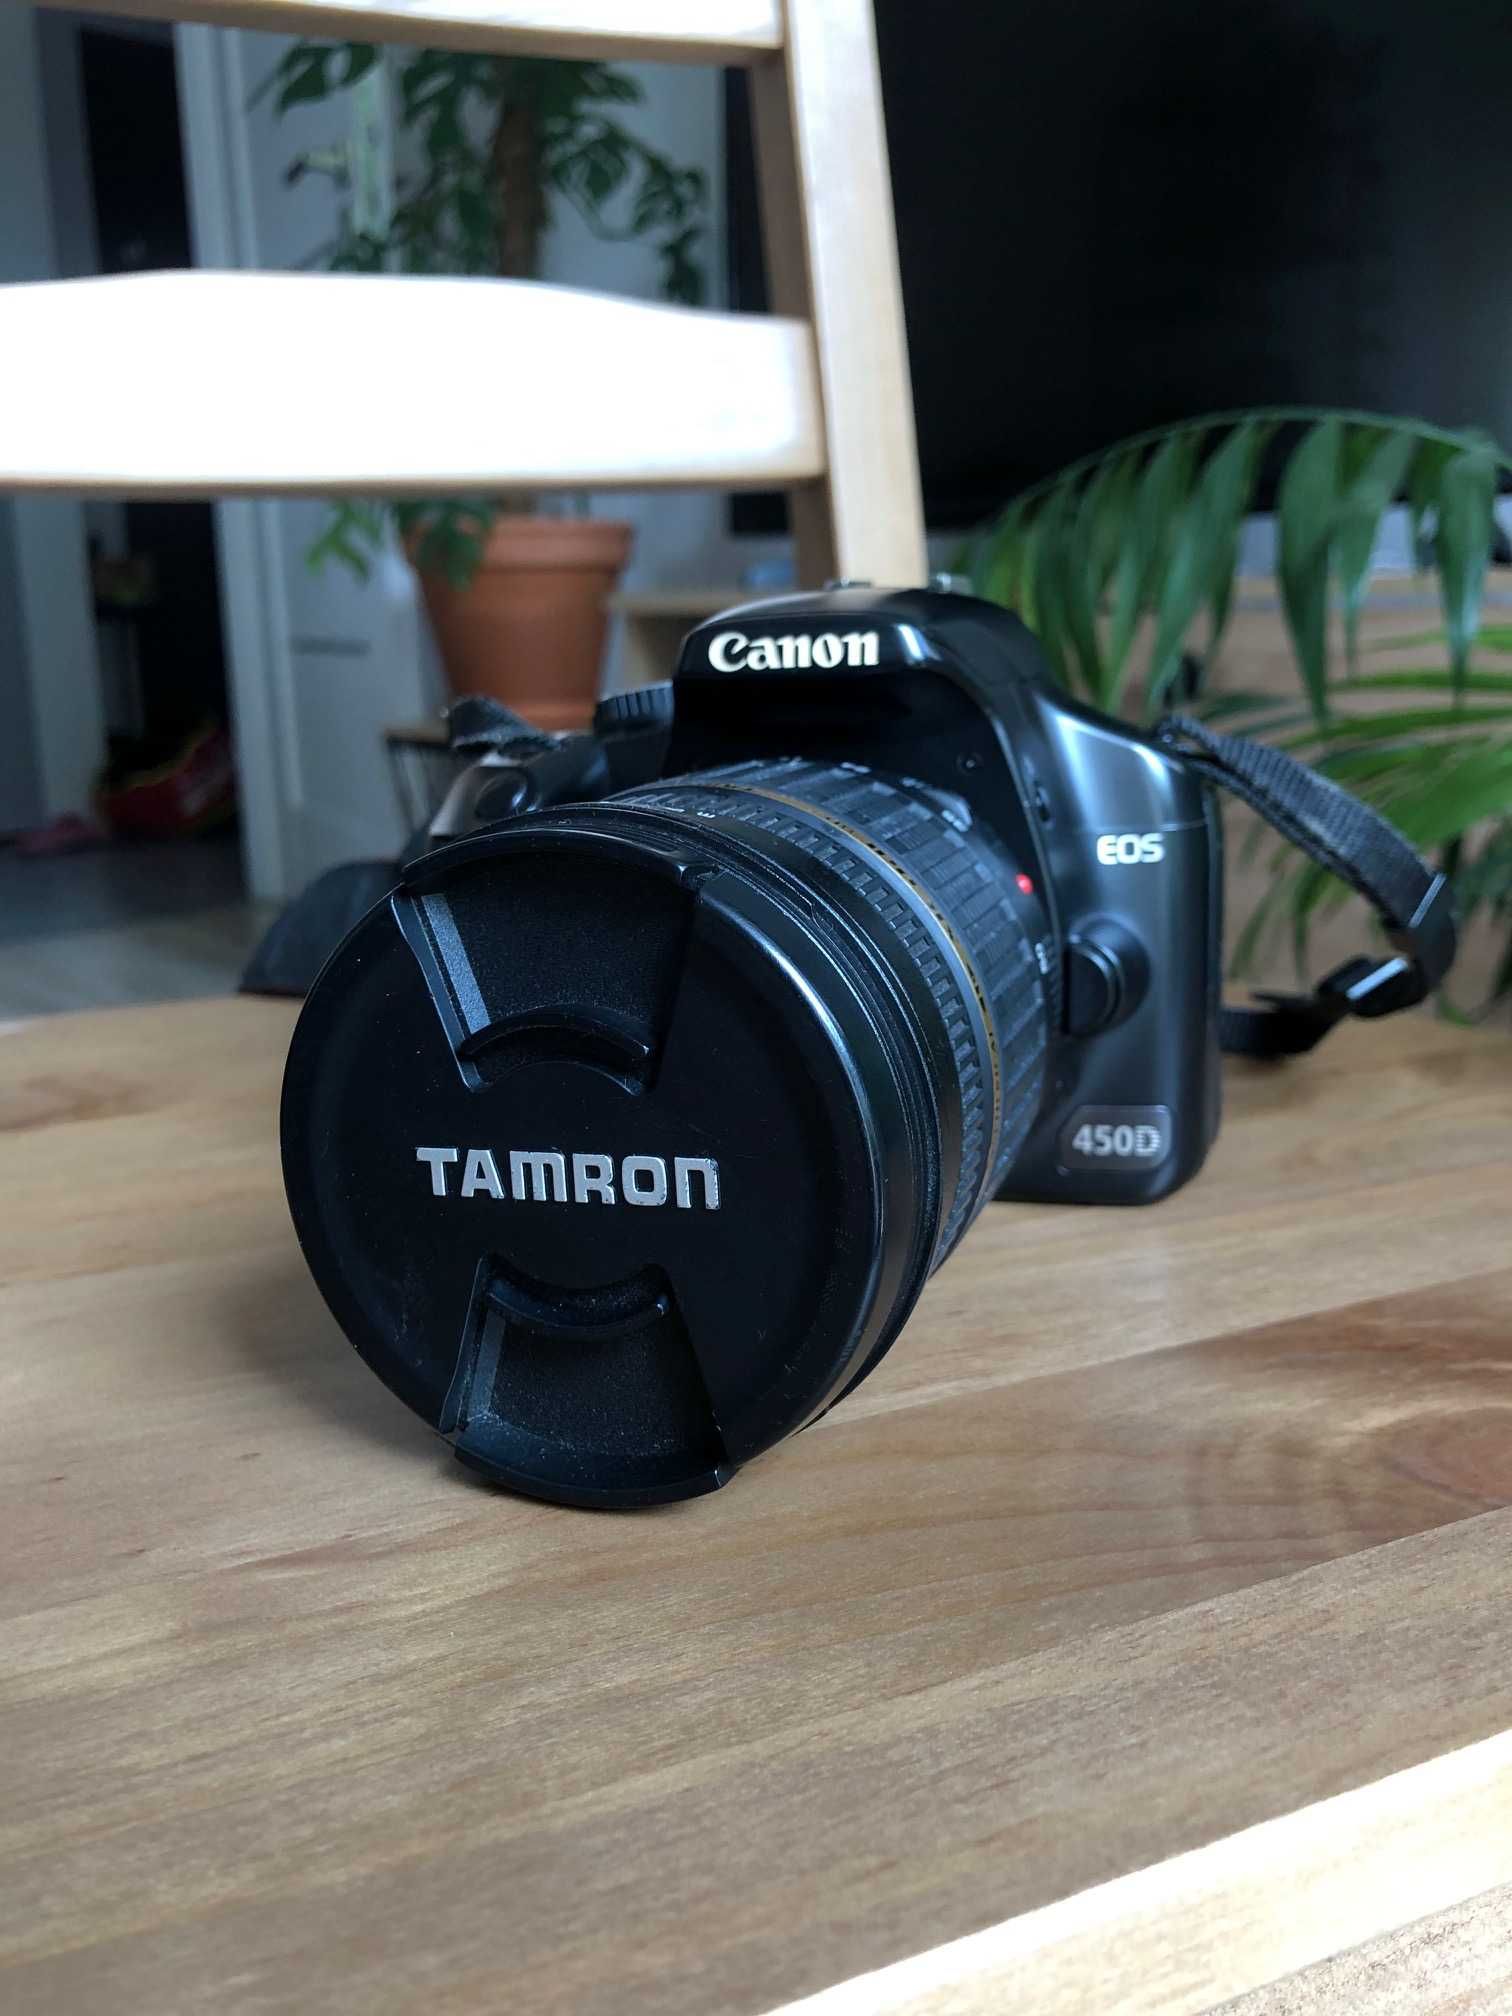 Canon 450d + tarmon 17-50mm 2.8.